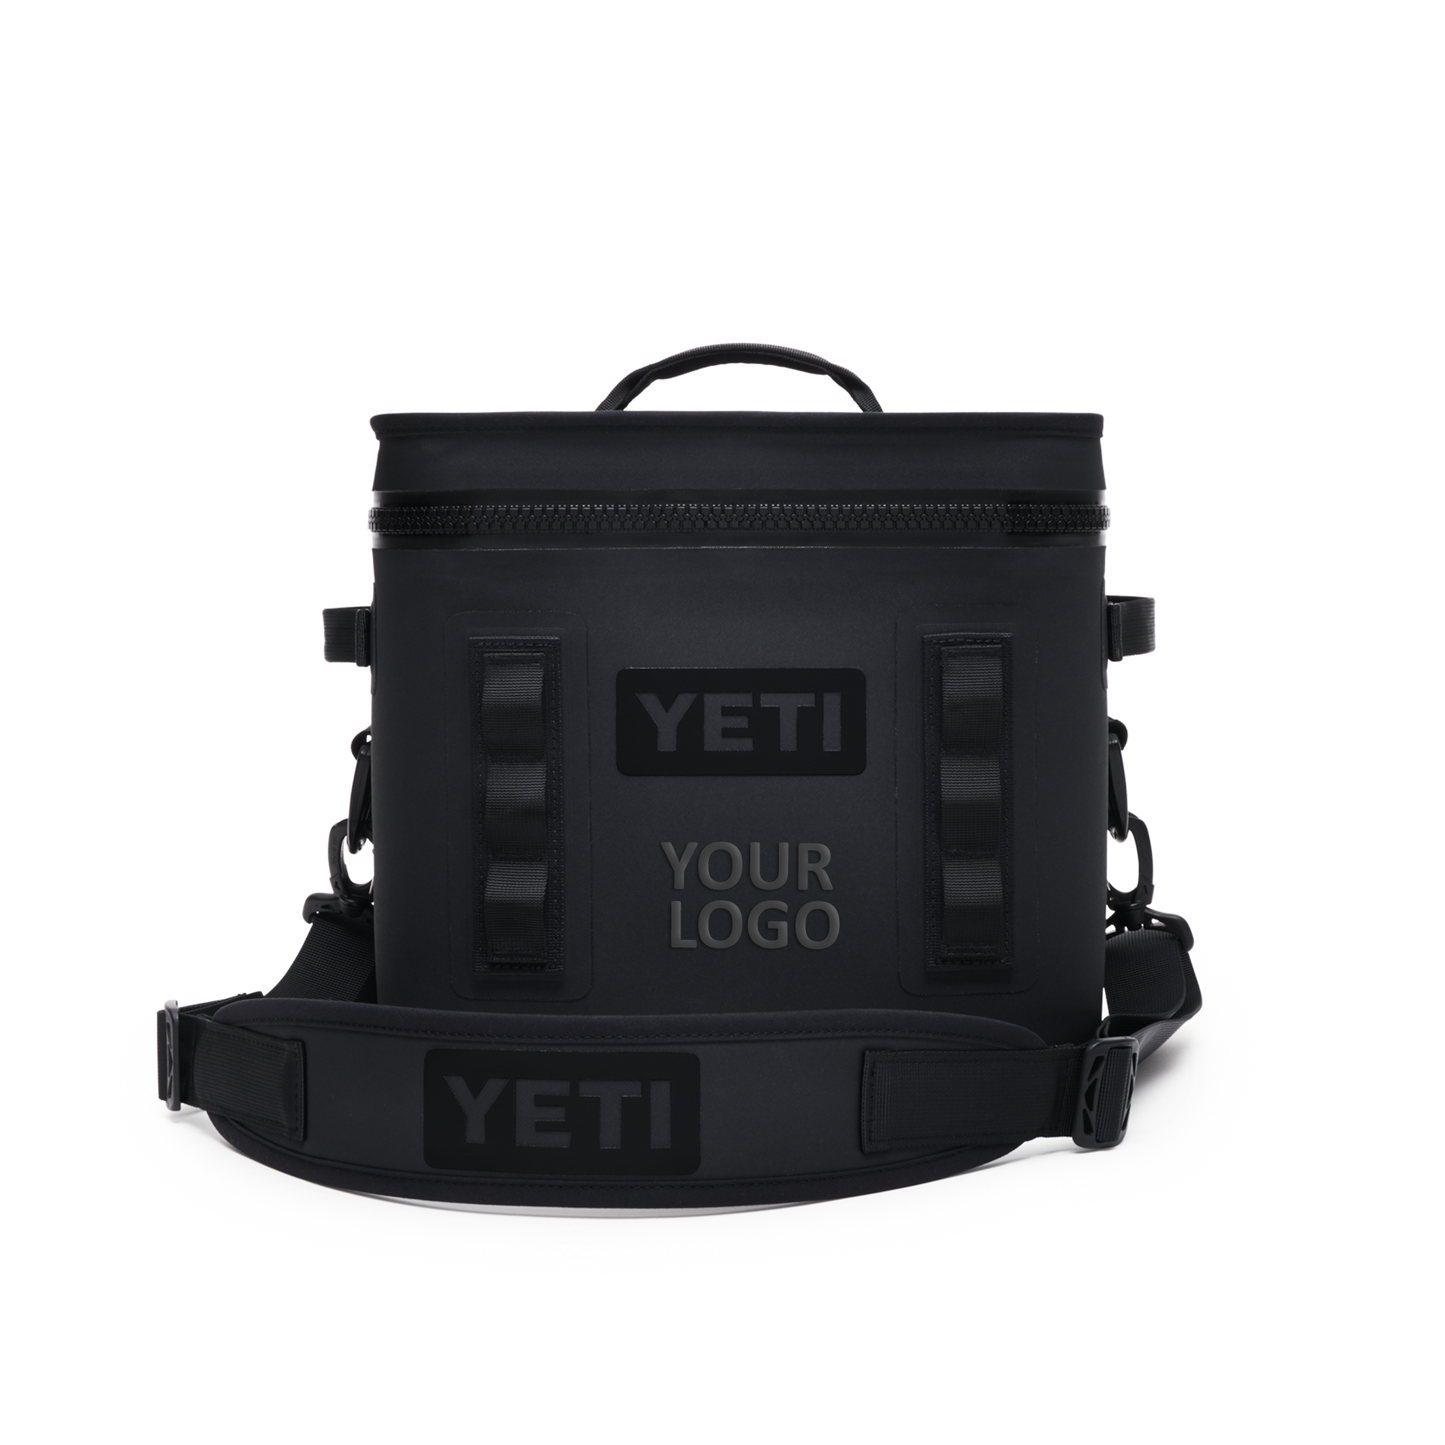 YETI Hopper Flip 12 Soft Custom Coolers, Black